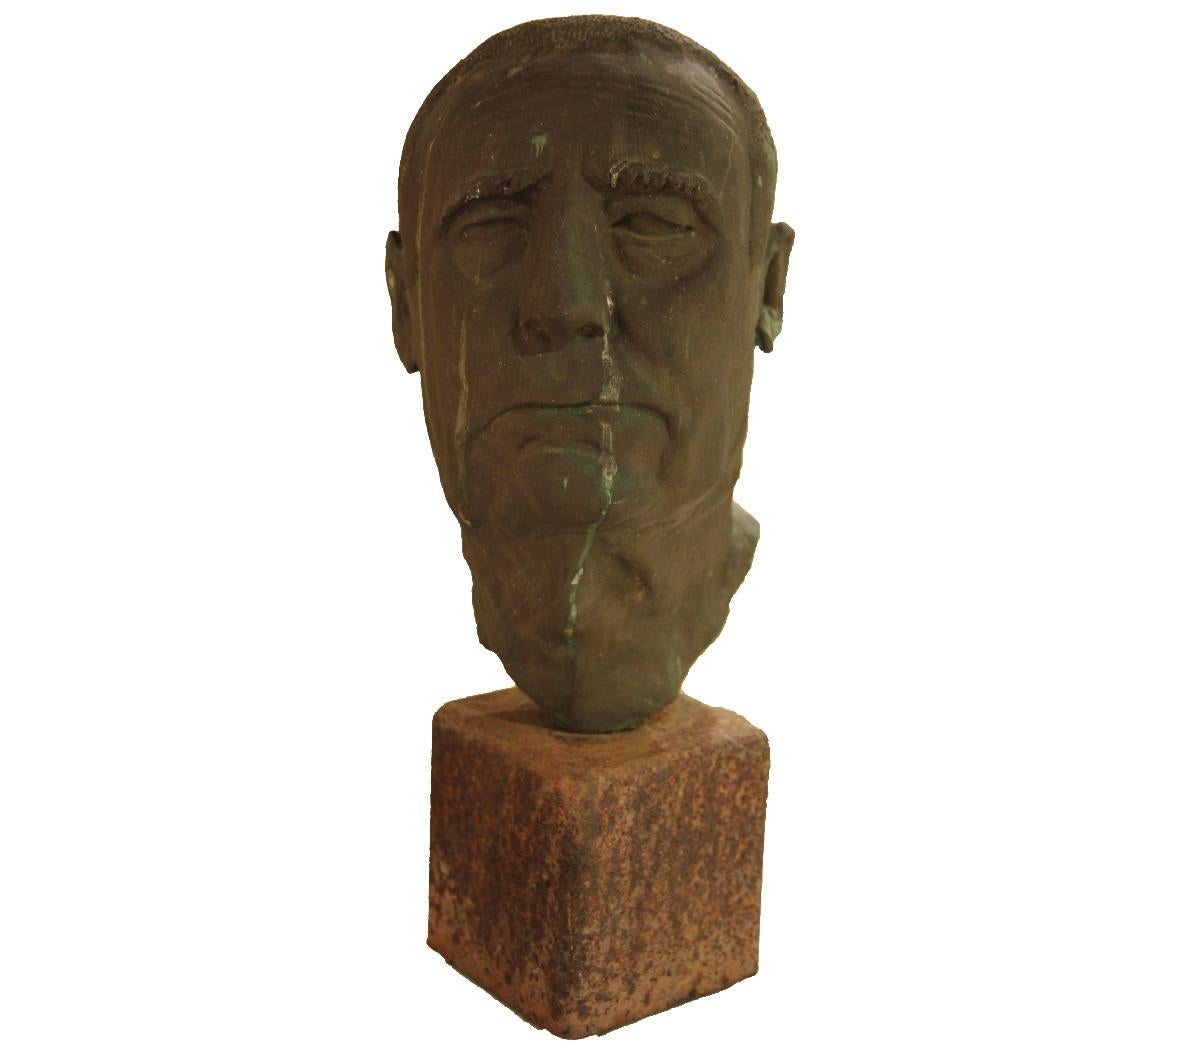 Rick Pasterchik Figurative Sculpture - "Olie" Bronze Bust of a Man